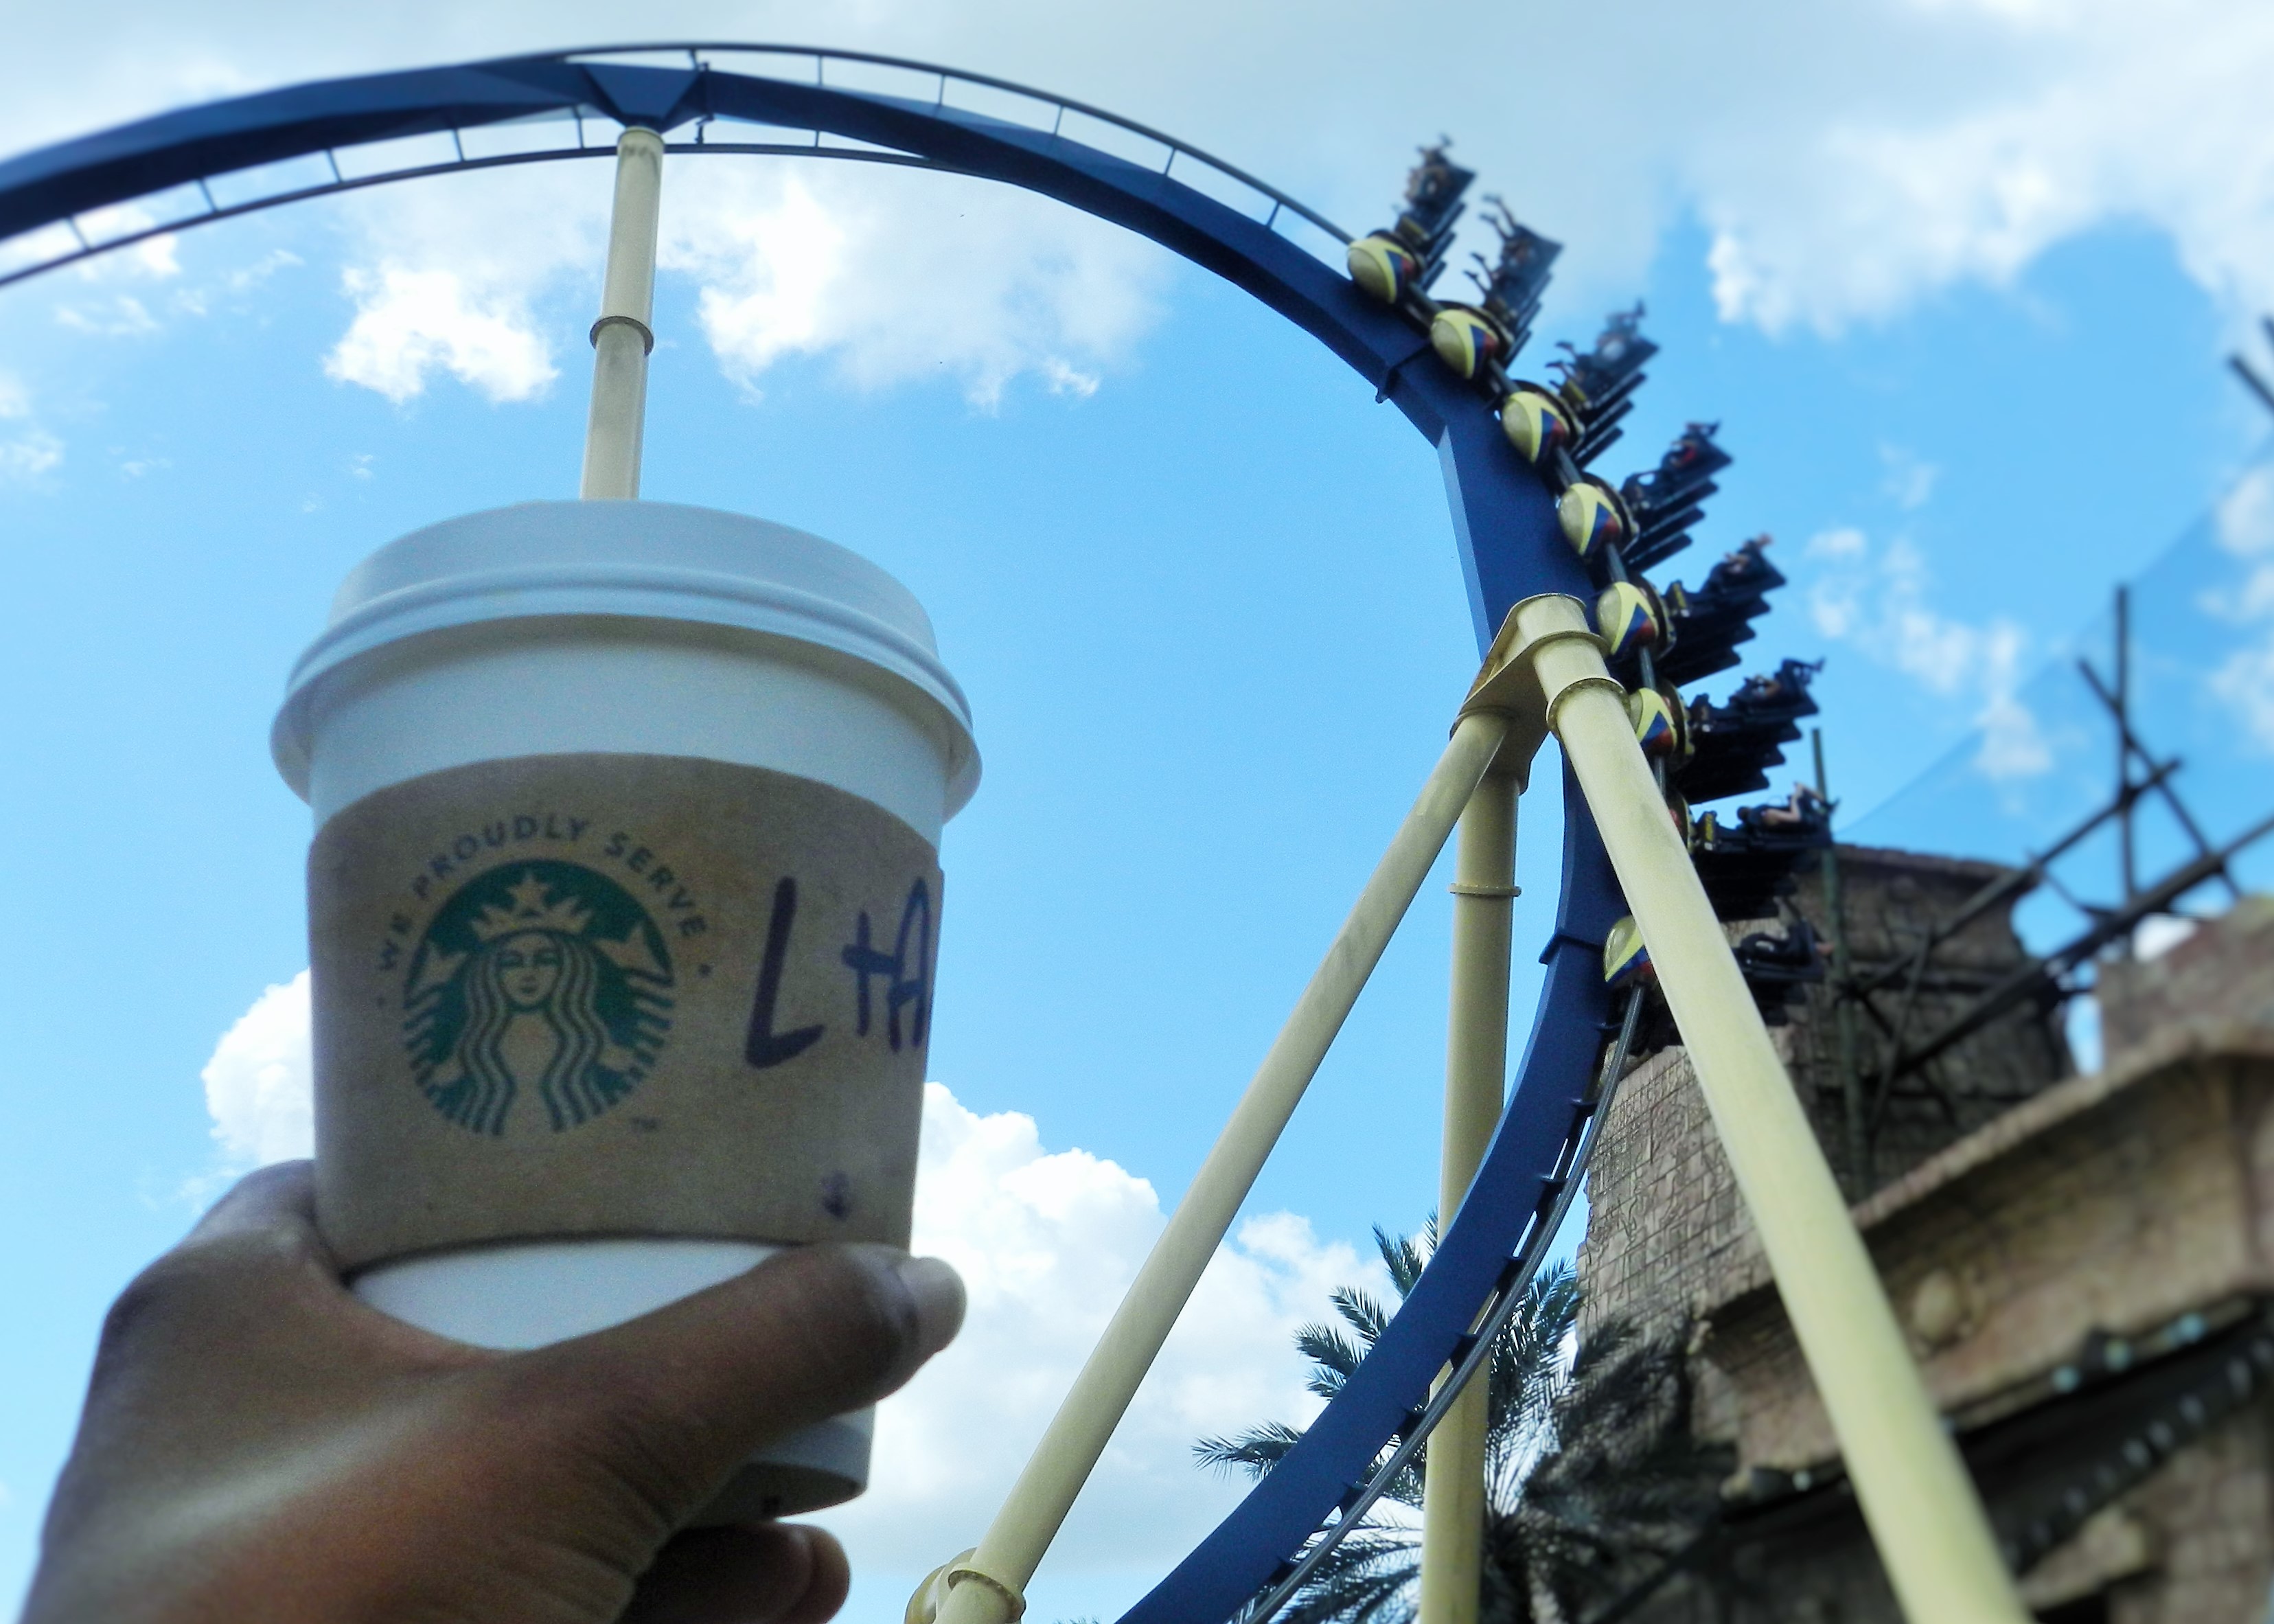 Coasters and Coffee Busch Gardens Montu Roller Coaster